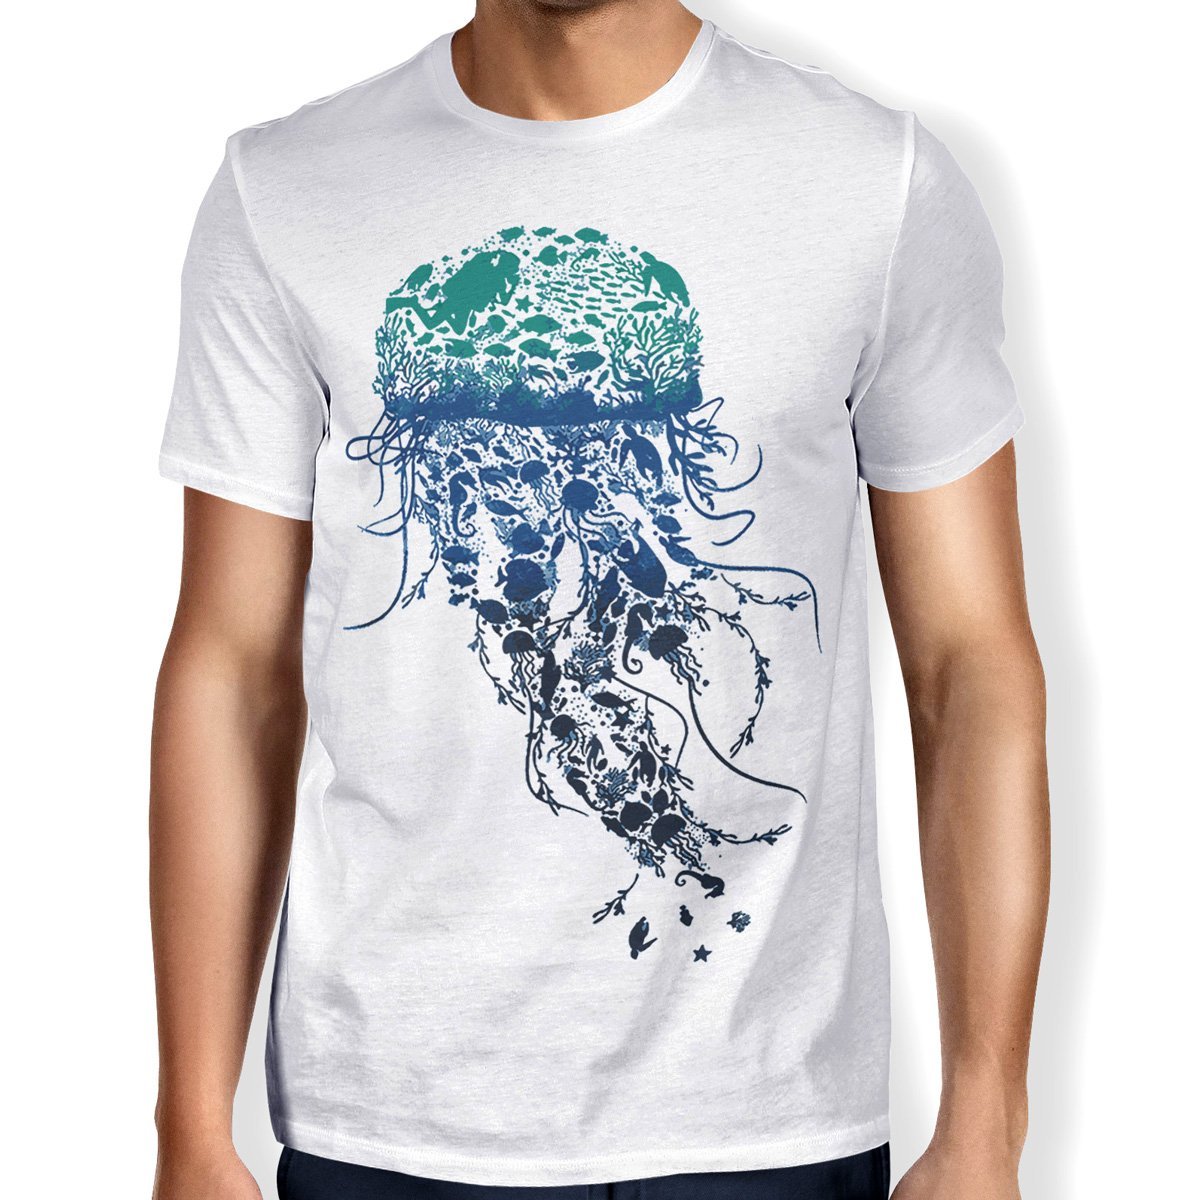 Underwater World Unisex T-shirt - Happiness Idea